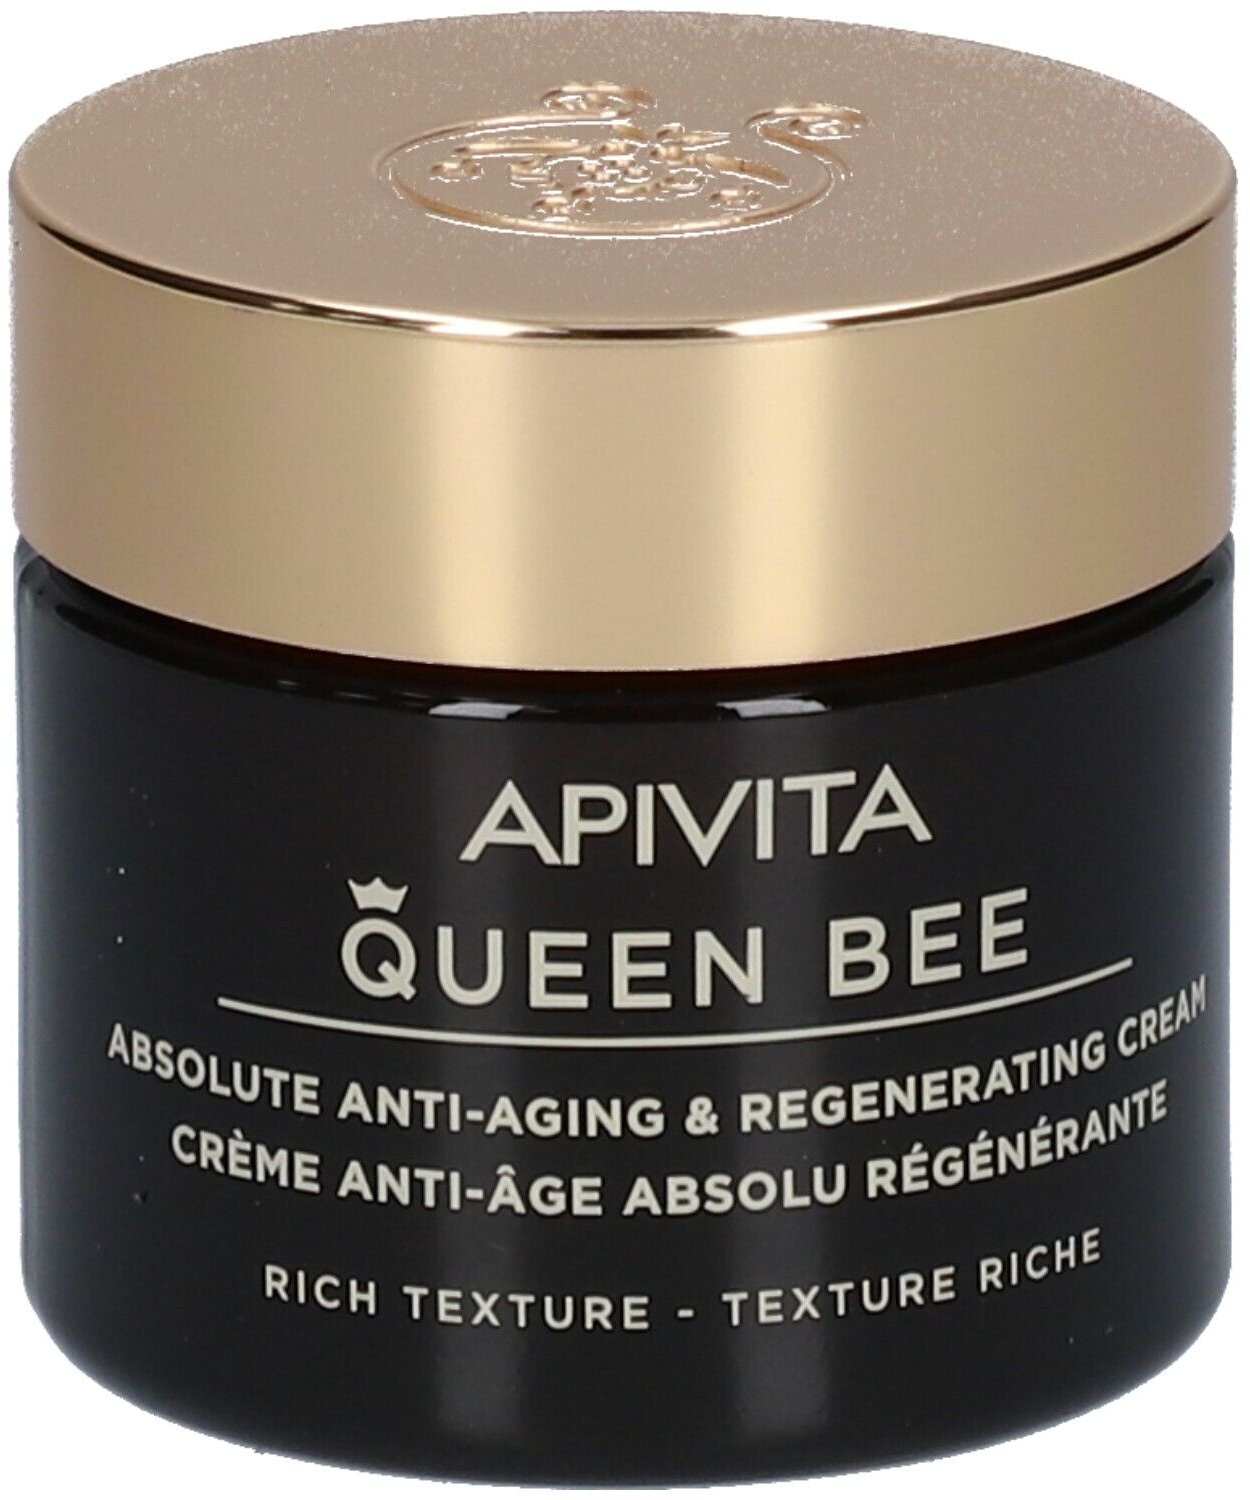 APIVITA QUEEN BEE Crème Anti-Âge Absolu Régénérante - Texture Riche 50 ml crème